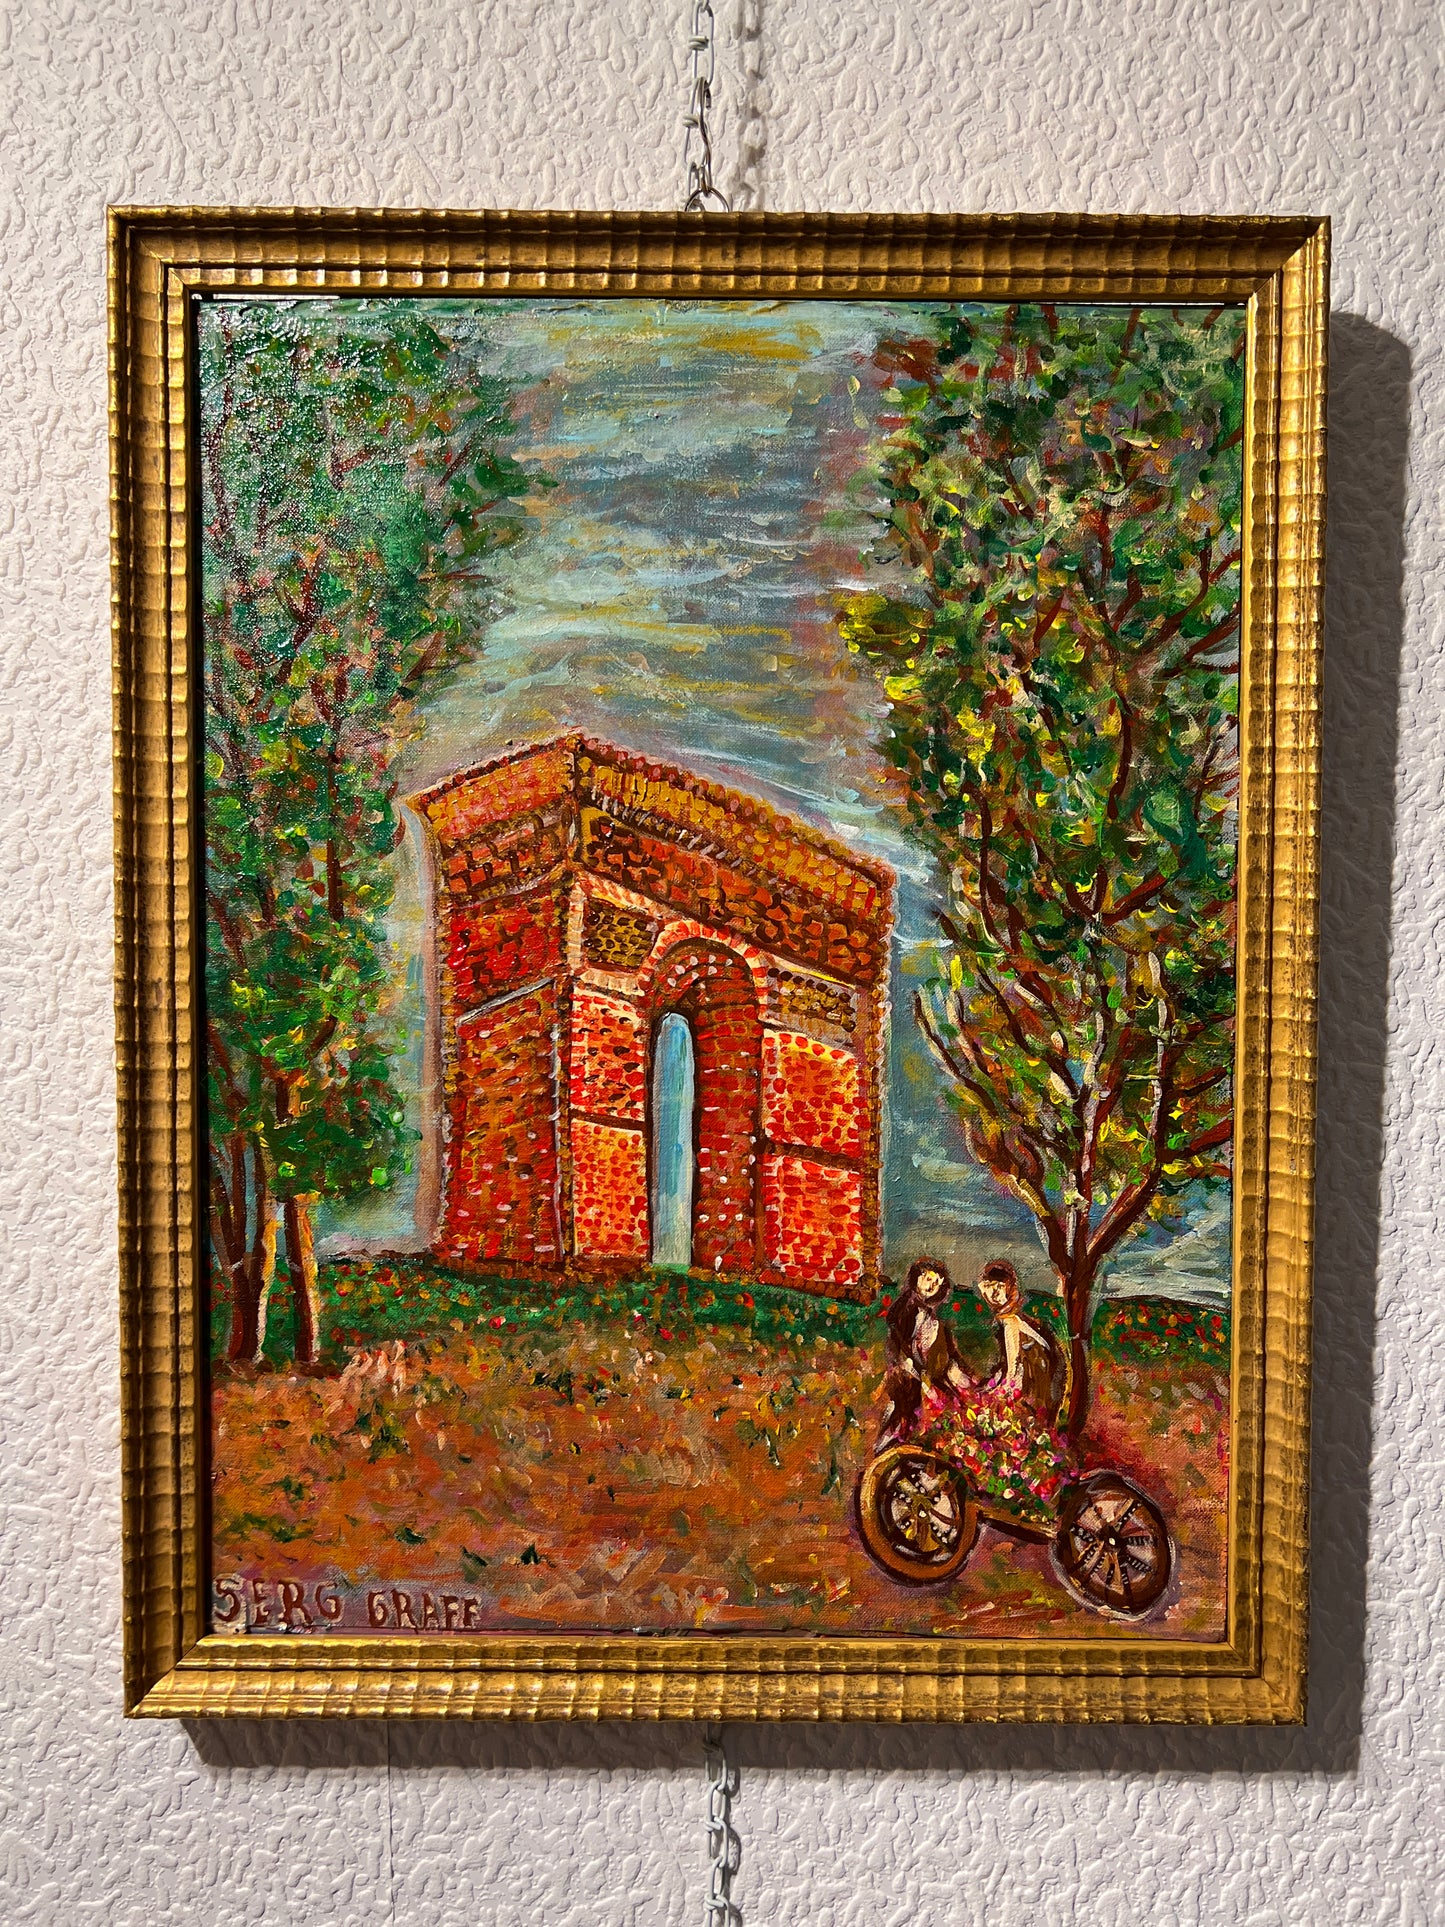 Original Painting on Canvas, Cityscape, Artist Serg Graff, framed